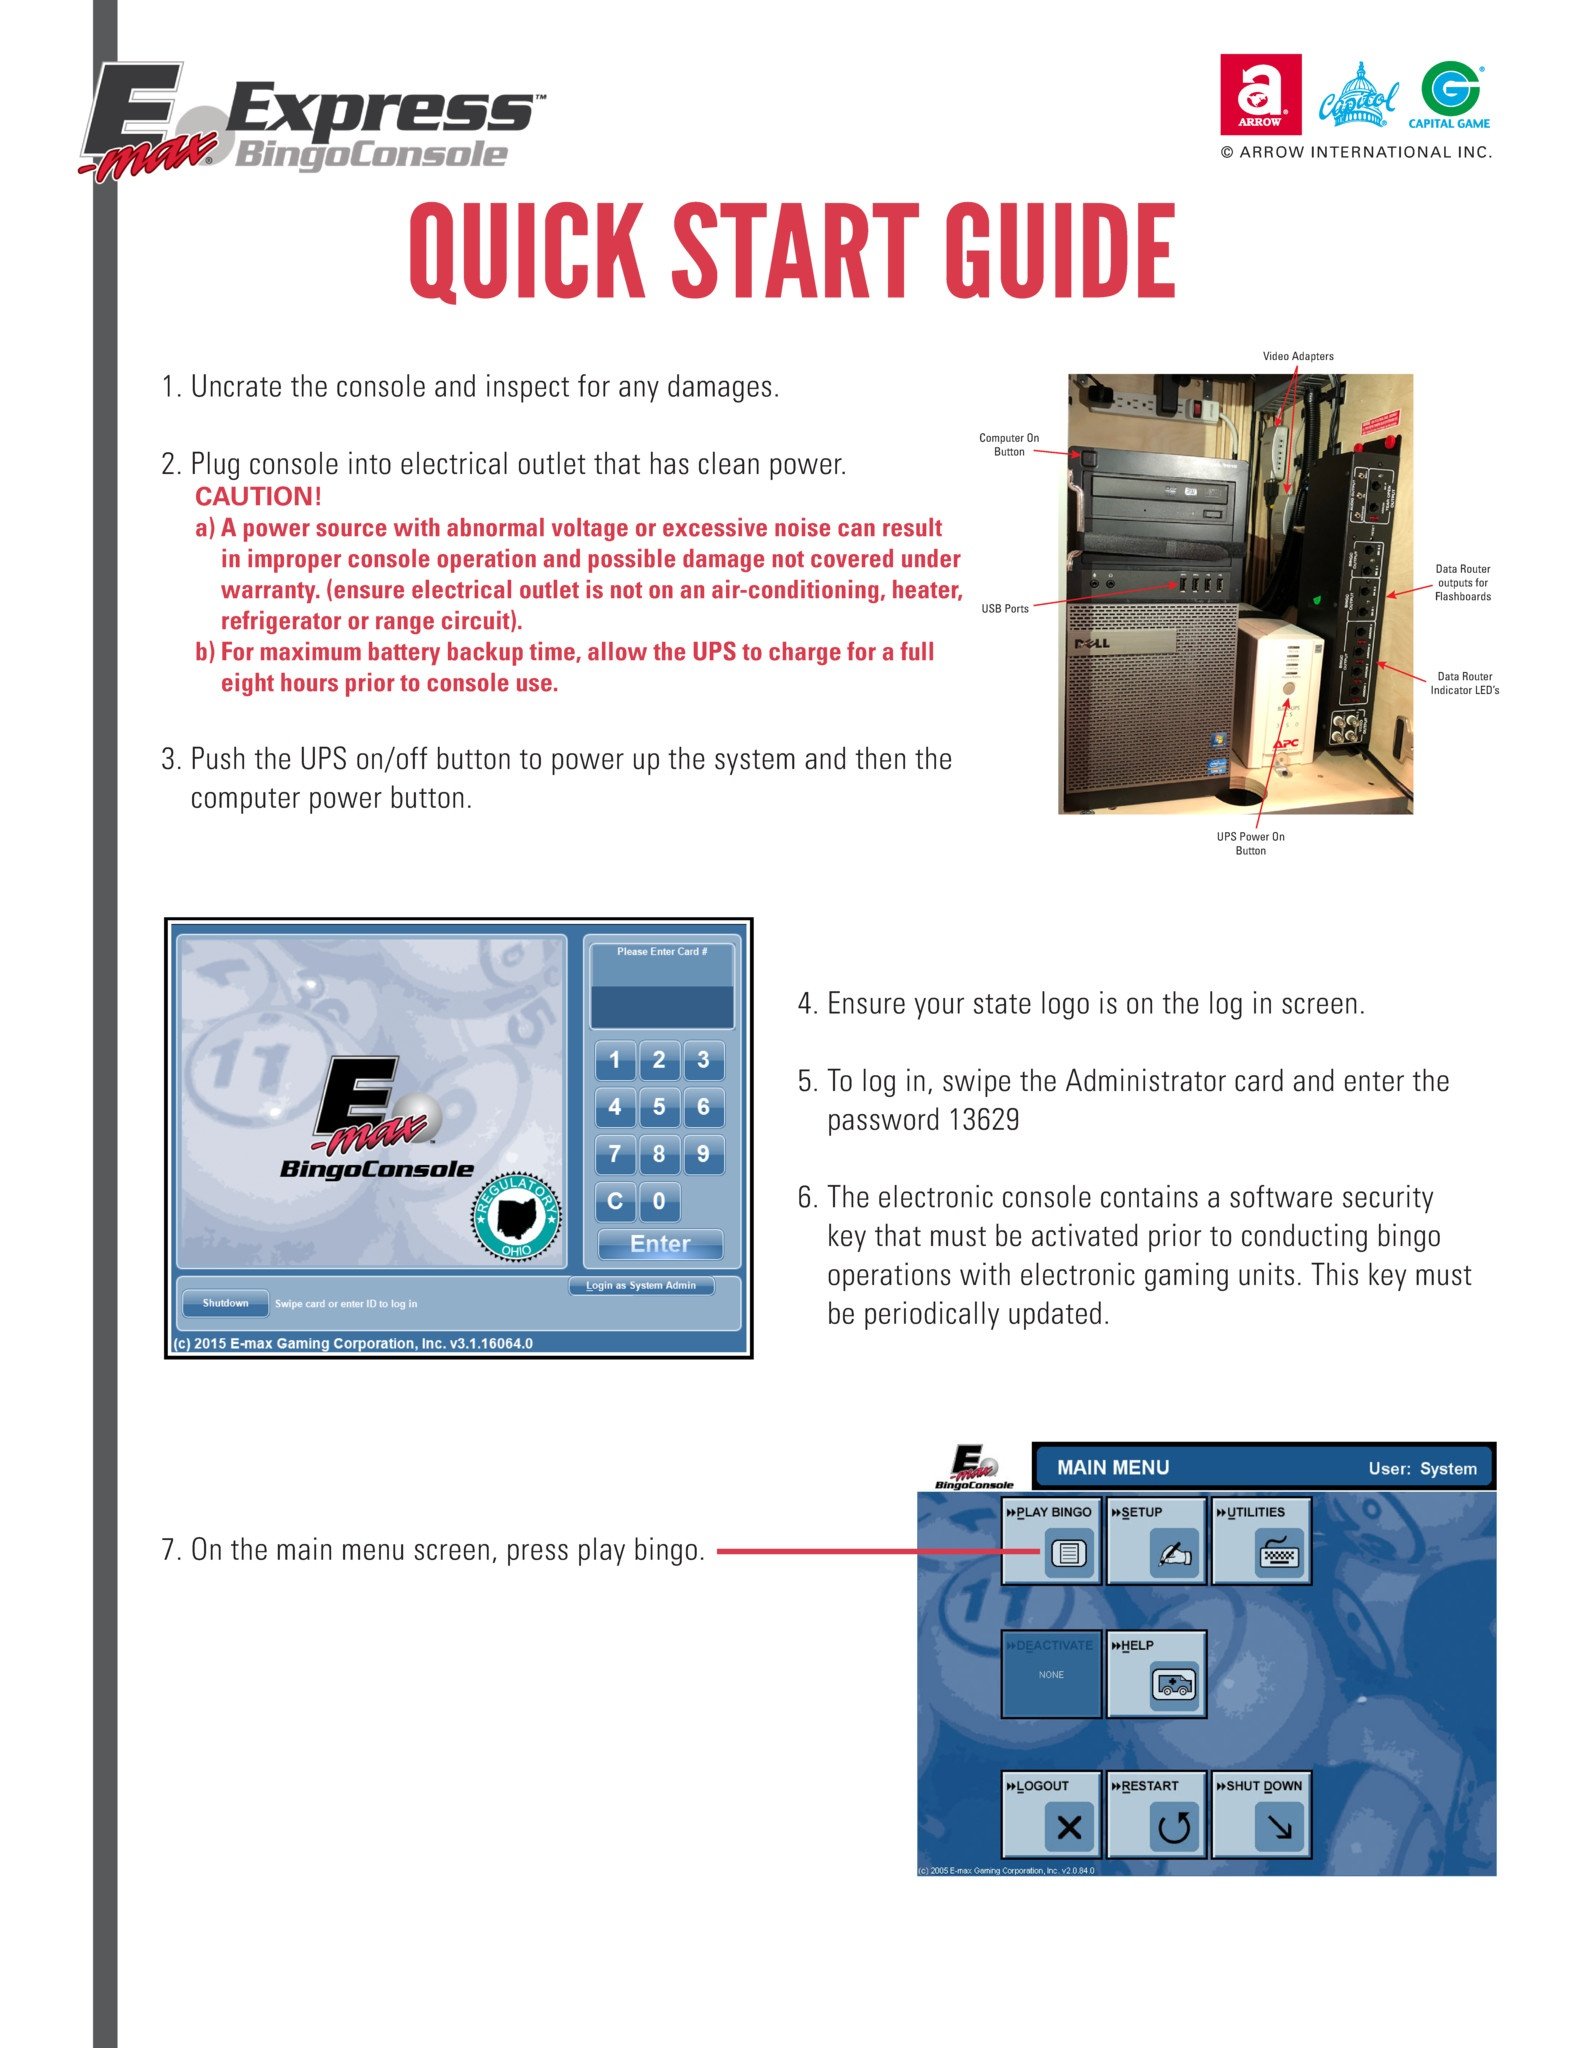 E-max Express Quick Start Guide Equipment Manuals/Quick Start Guides